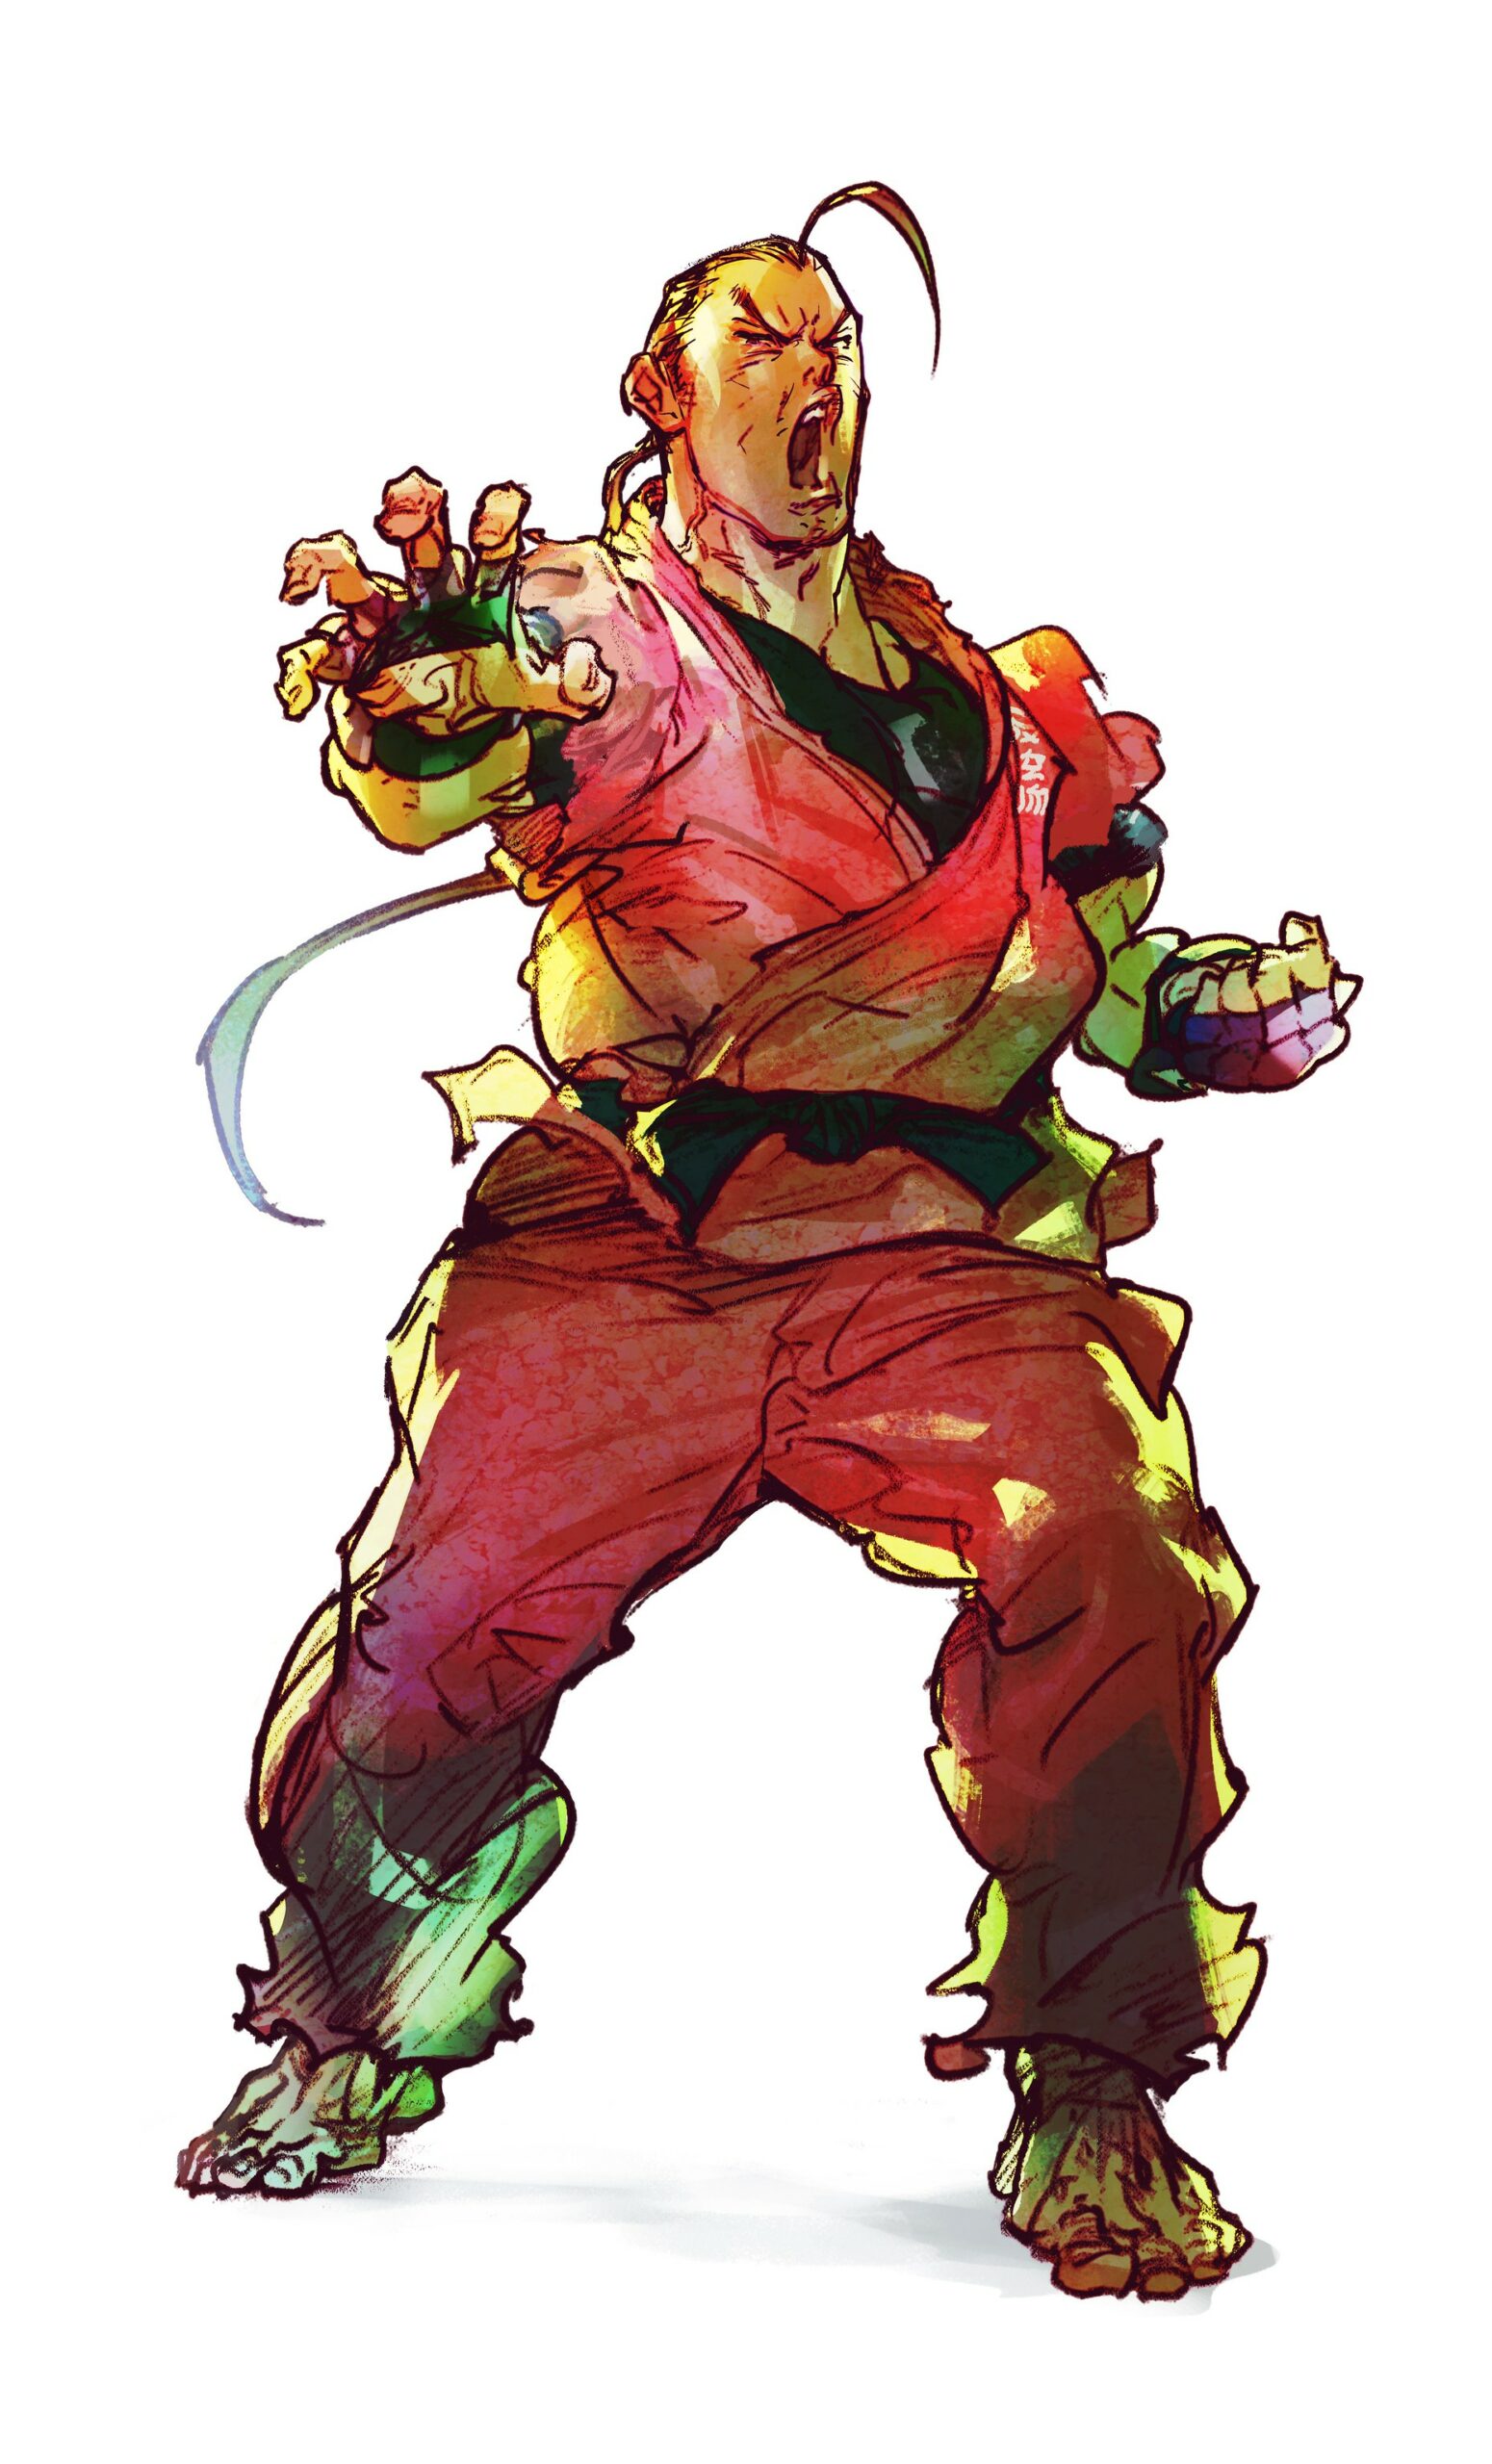 You haven't fully appreciated the art of Street Fighter 5, Tekken